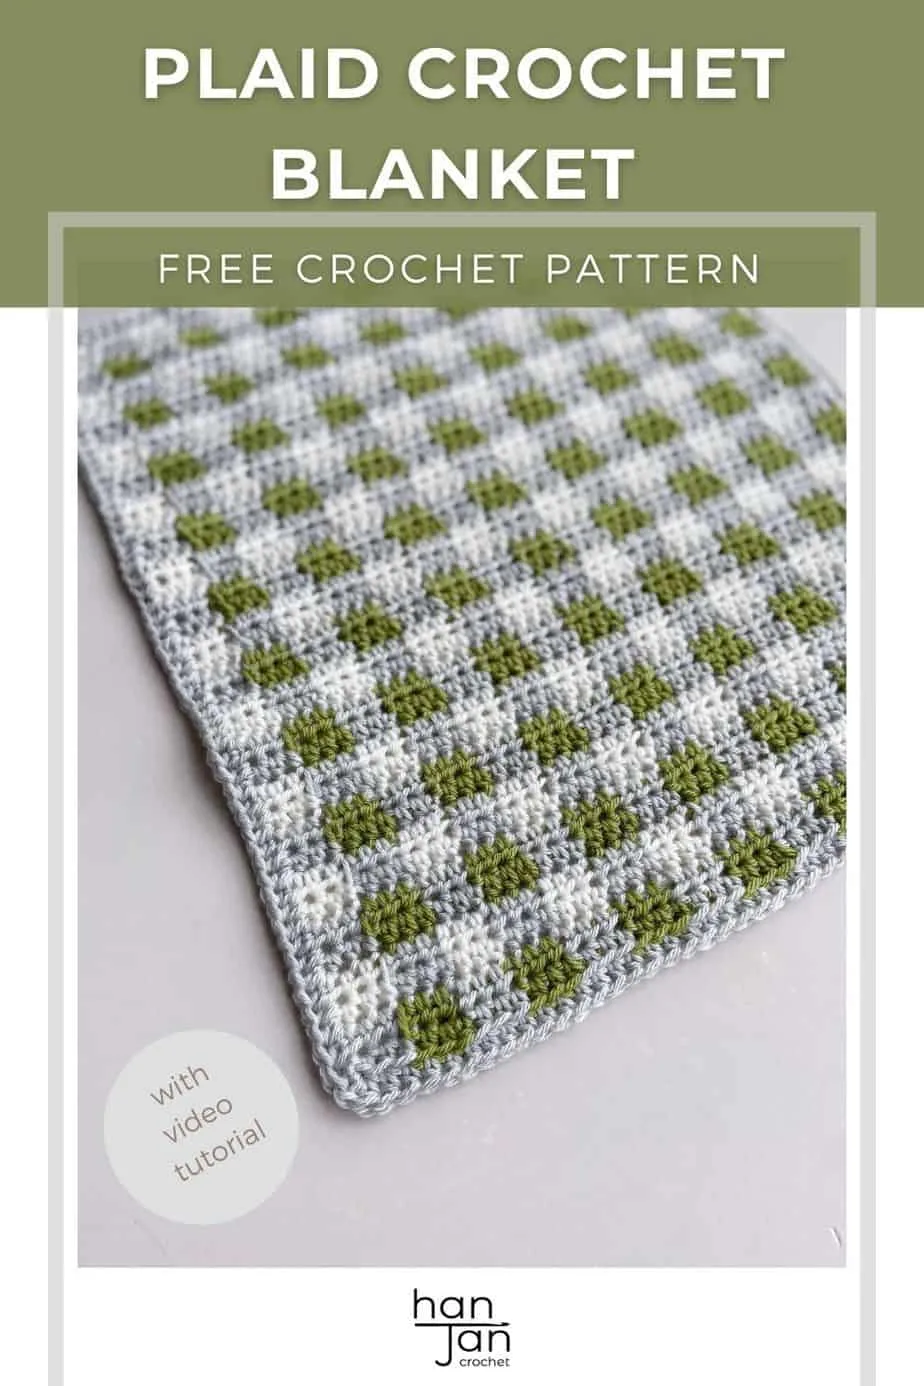 plaid crochet blanket pattern shown in modern gender neutral grey, white and green